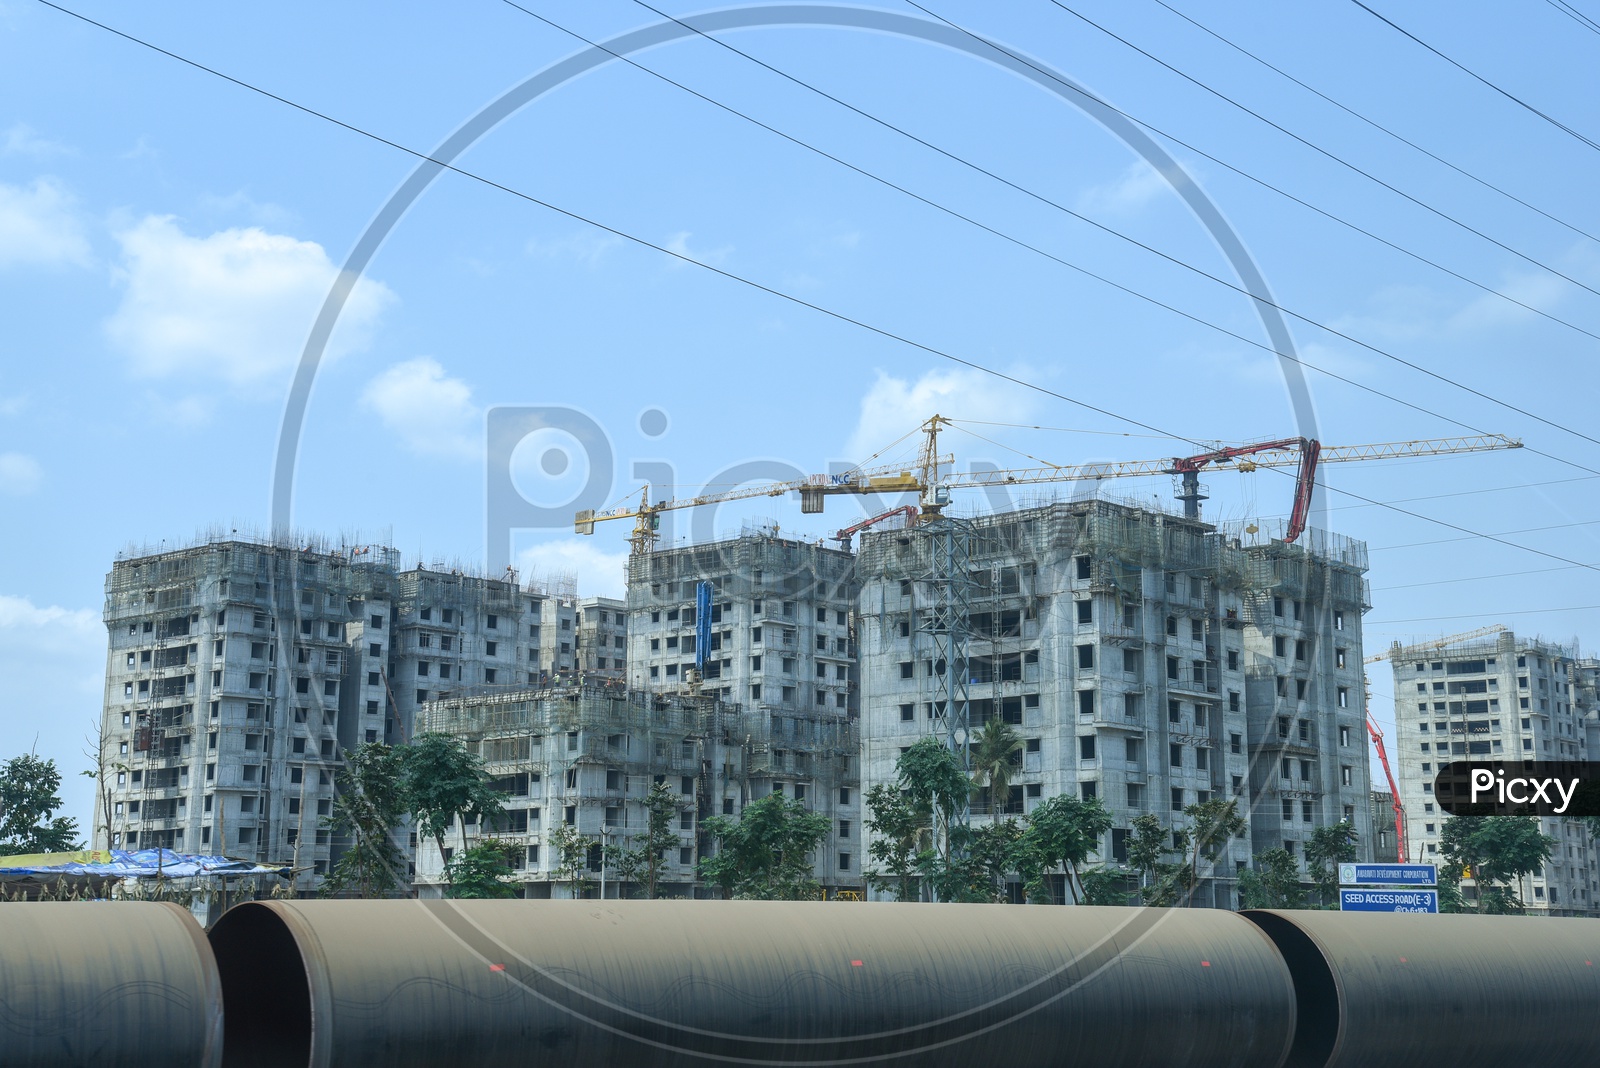 Construction of High Rise Buildings And Heavy Cranes At Amaravati Capital Region